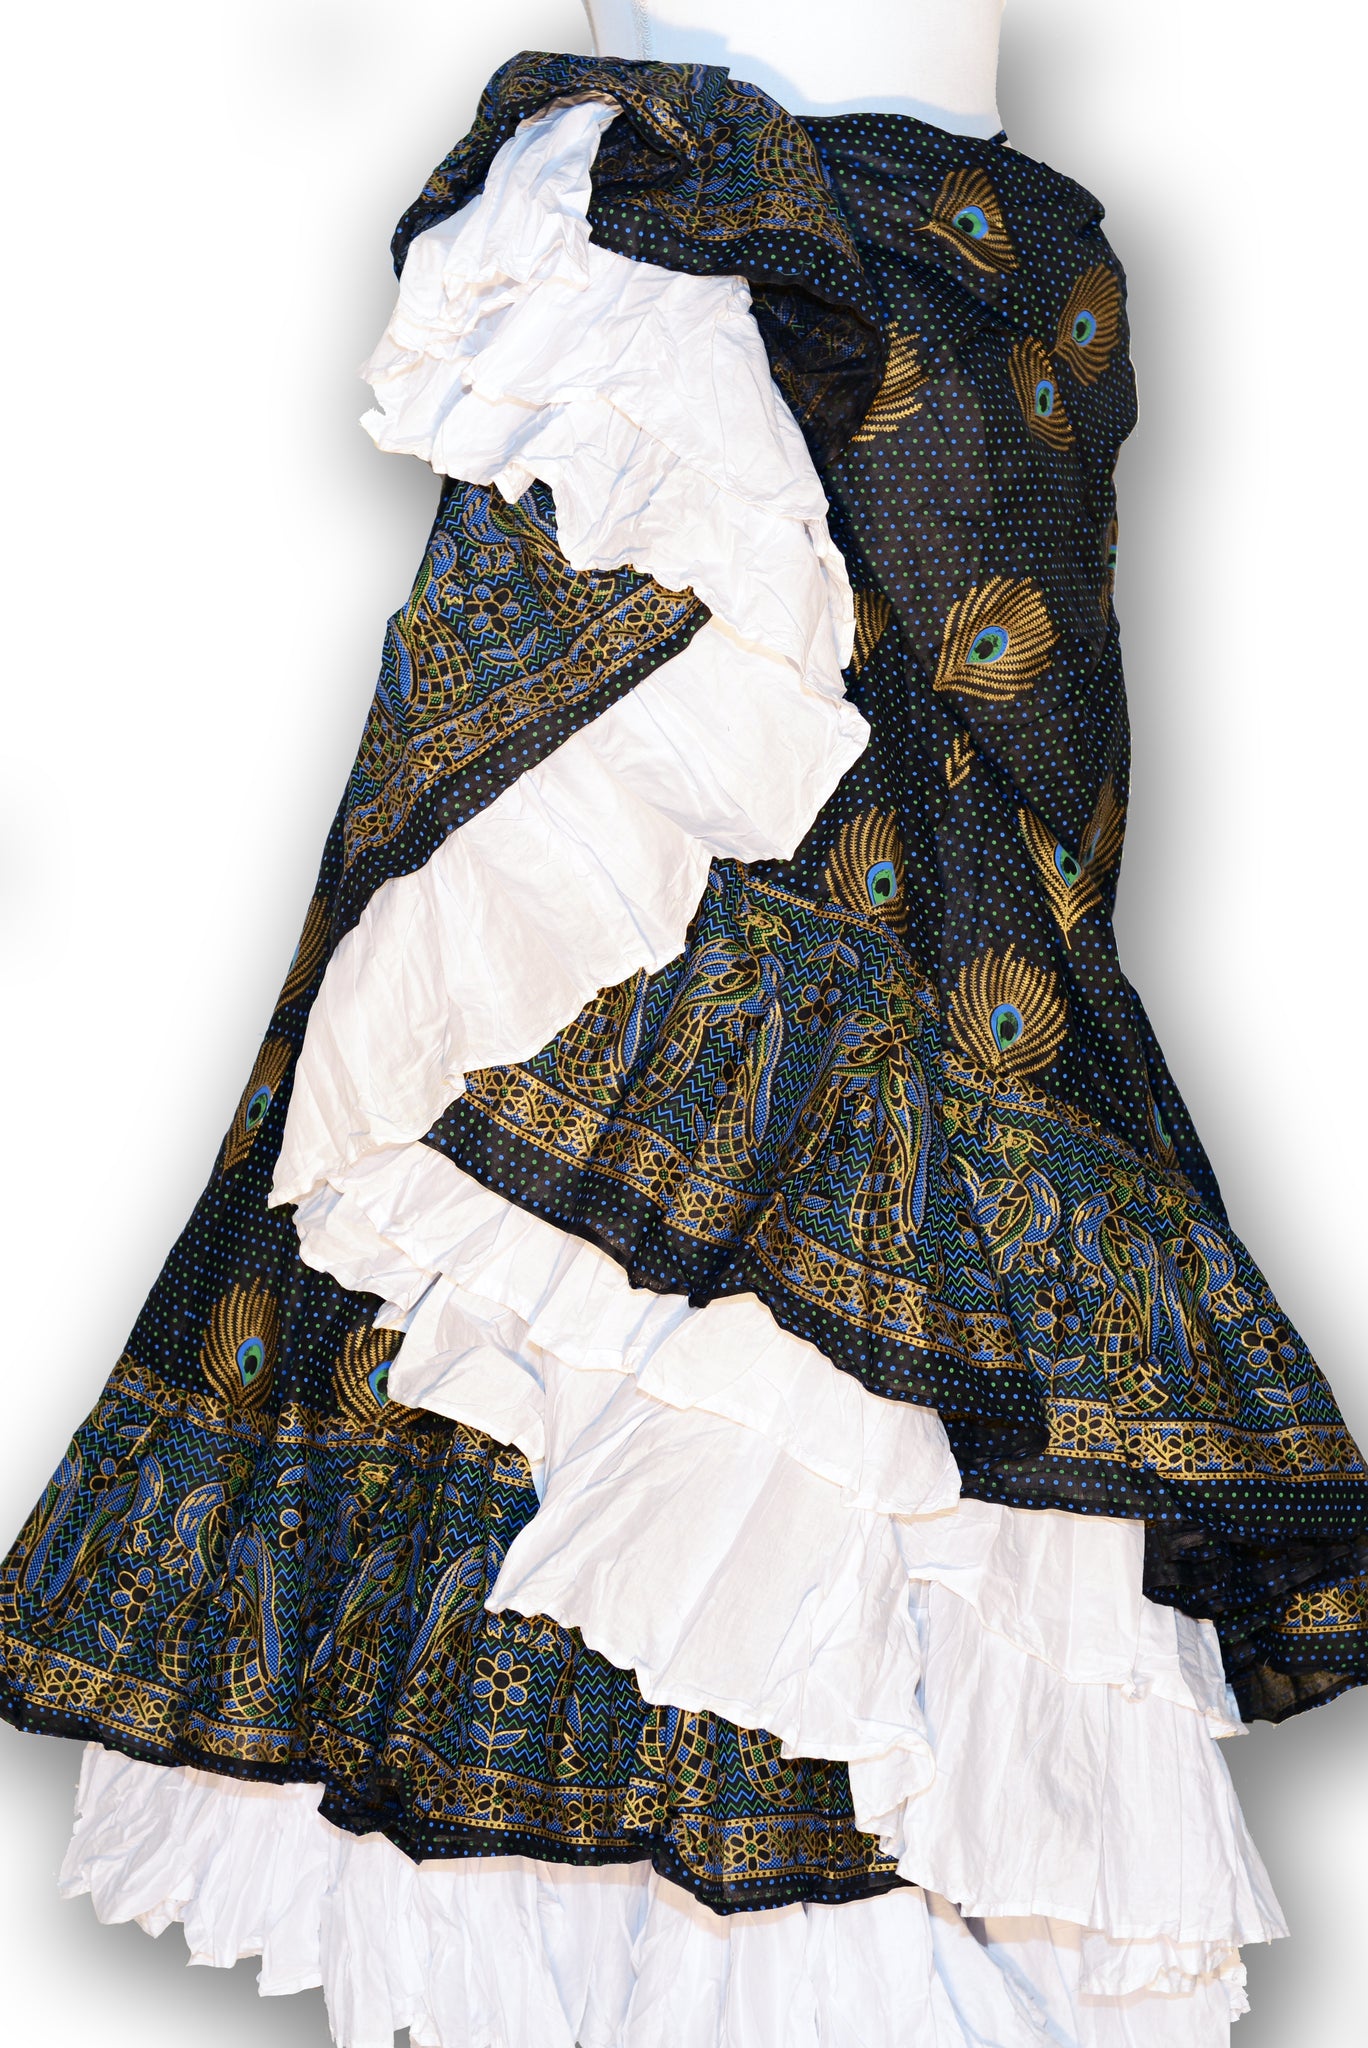 Combodeal - Peacock and feather blockprint skirt